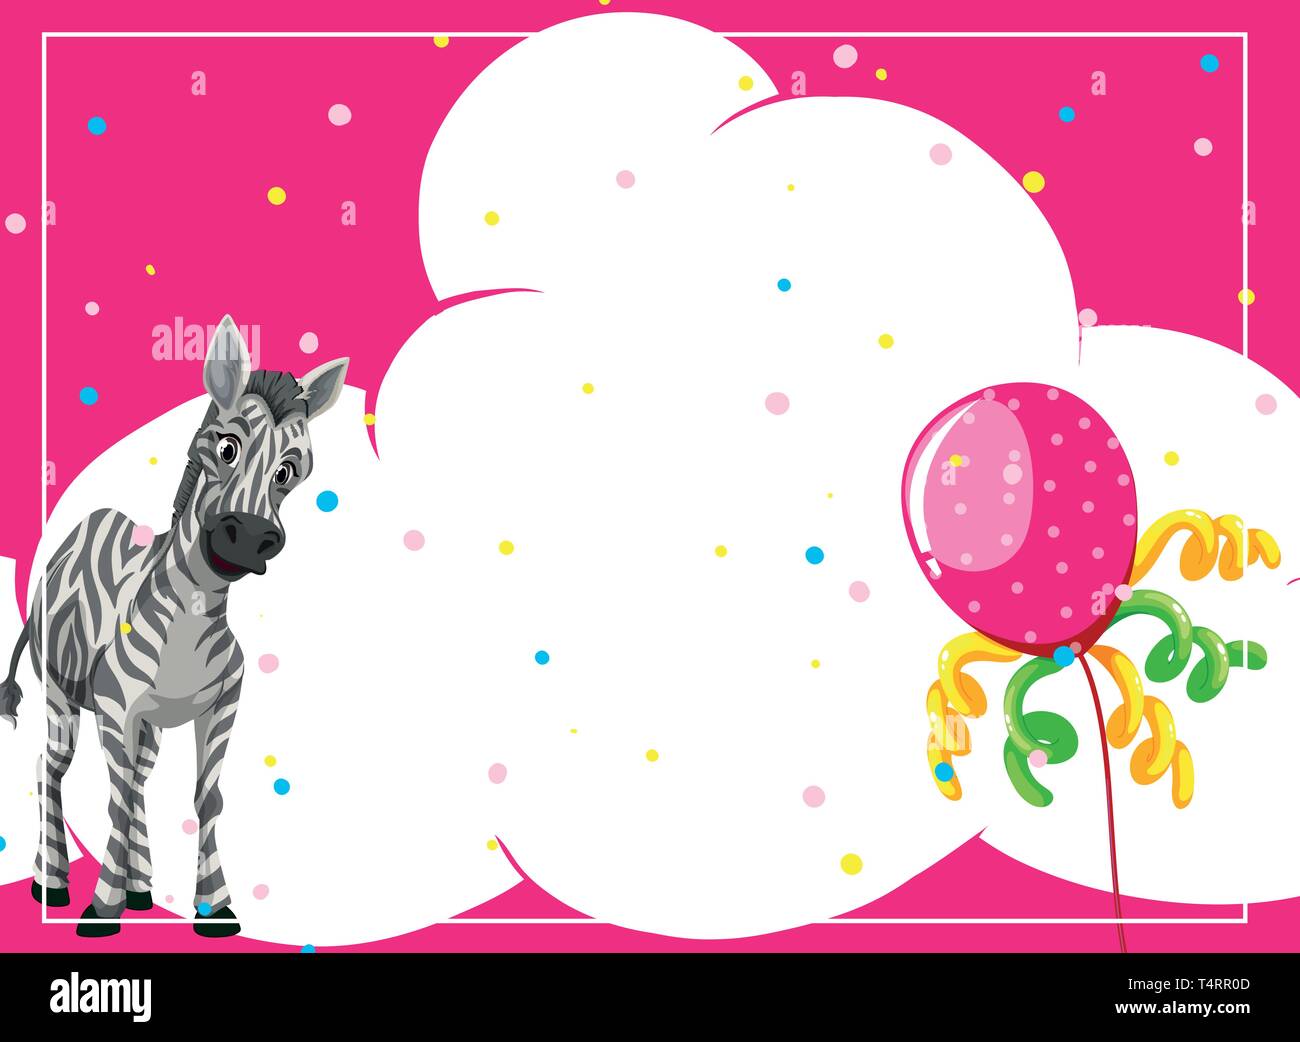 Zebra on party border illustration Stock Vector